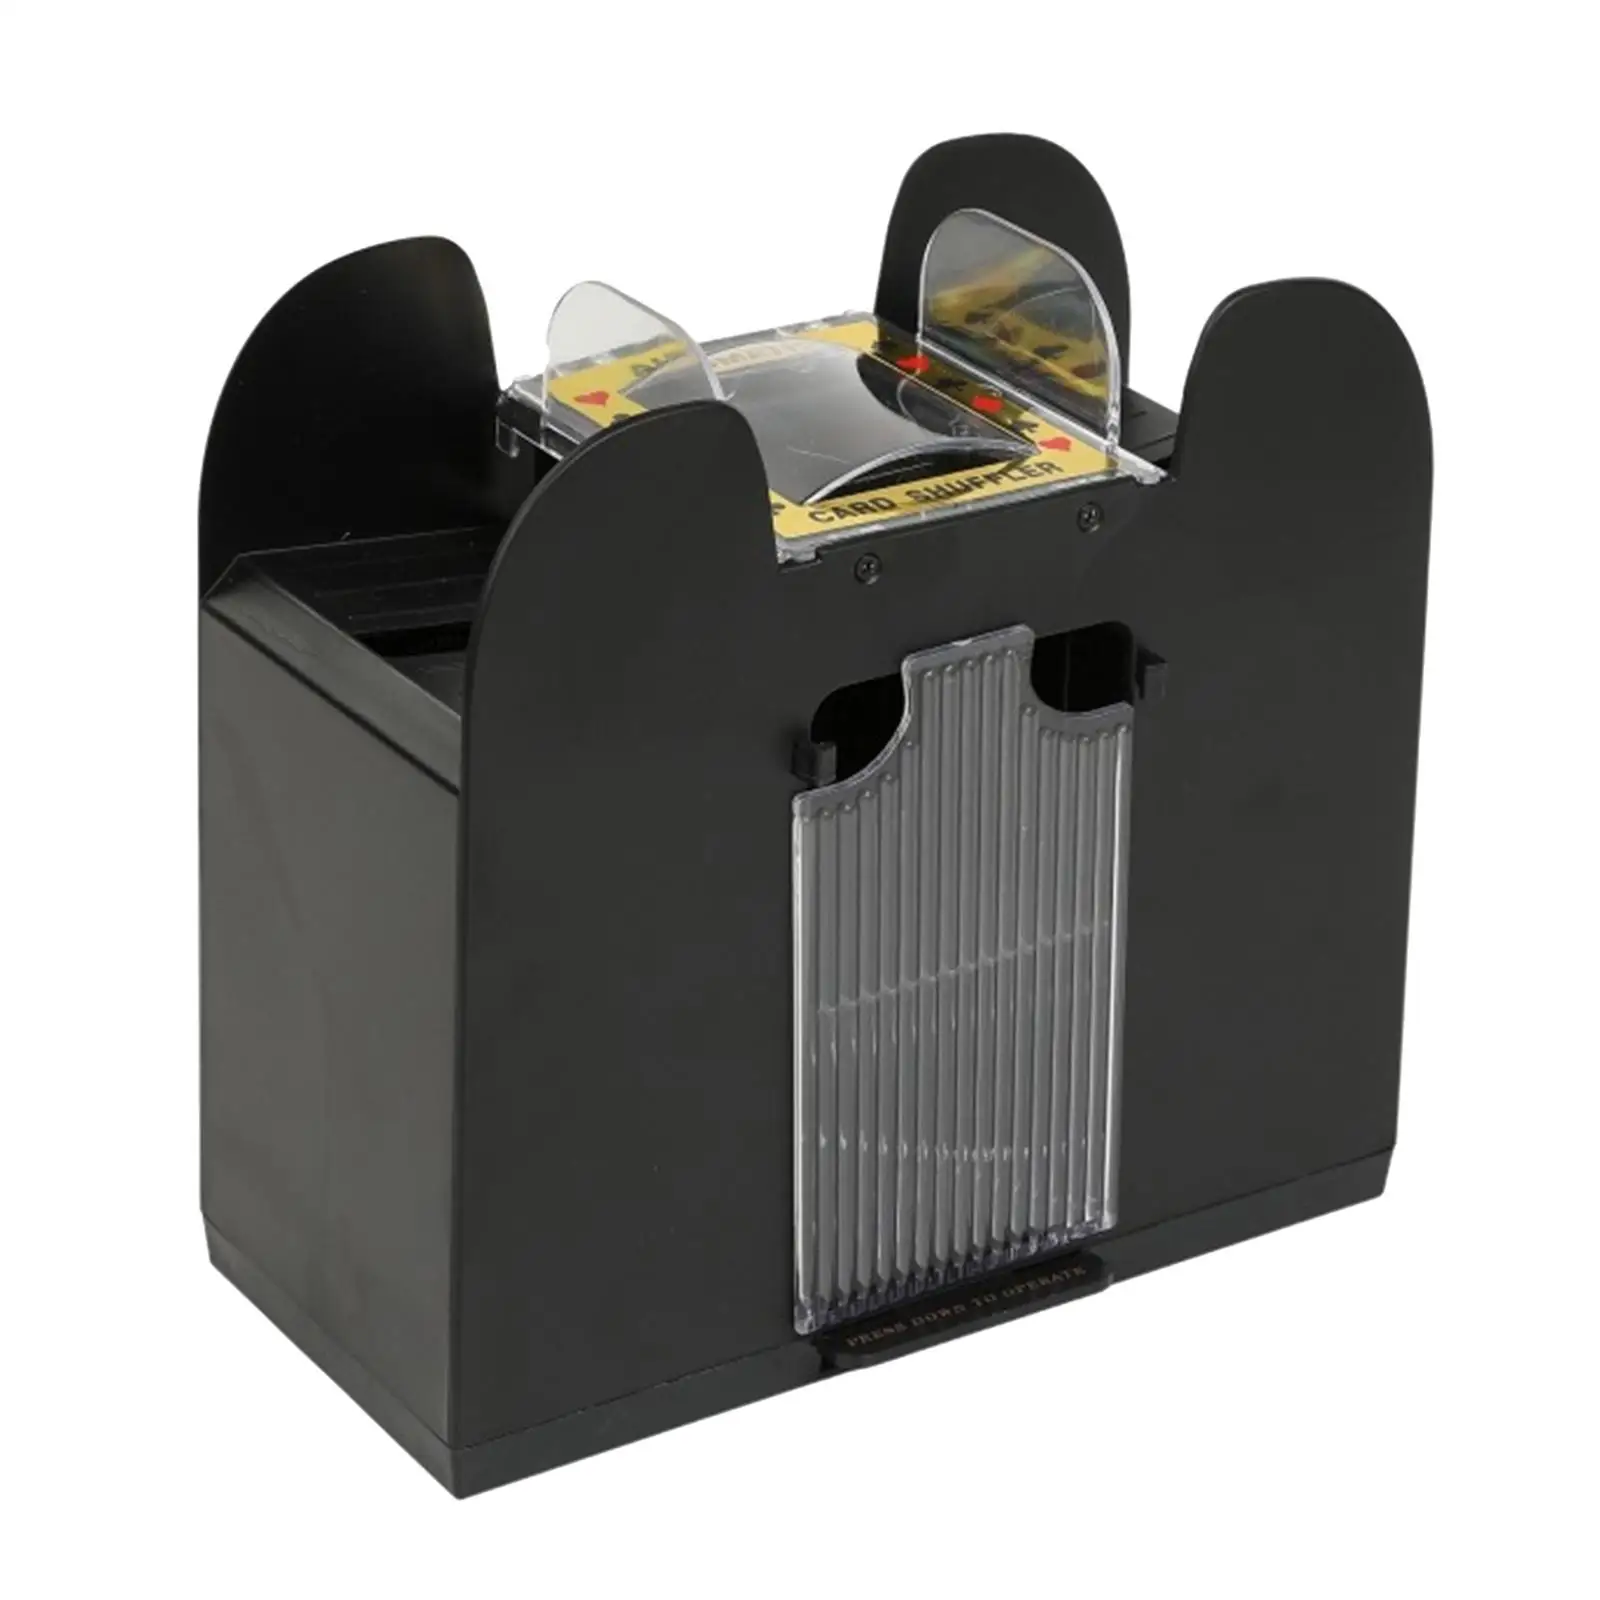 Card Shuffler  Battery&USB Shuffling Machine Poker Cards for Home